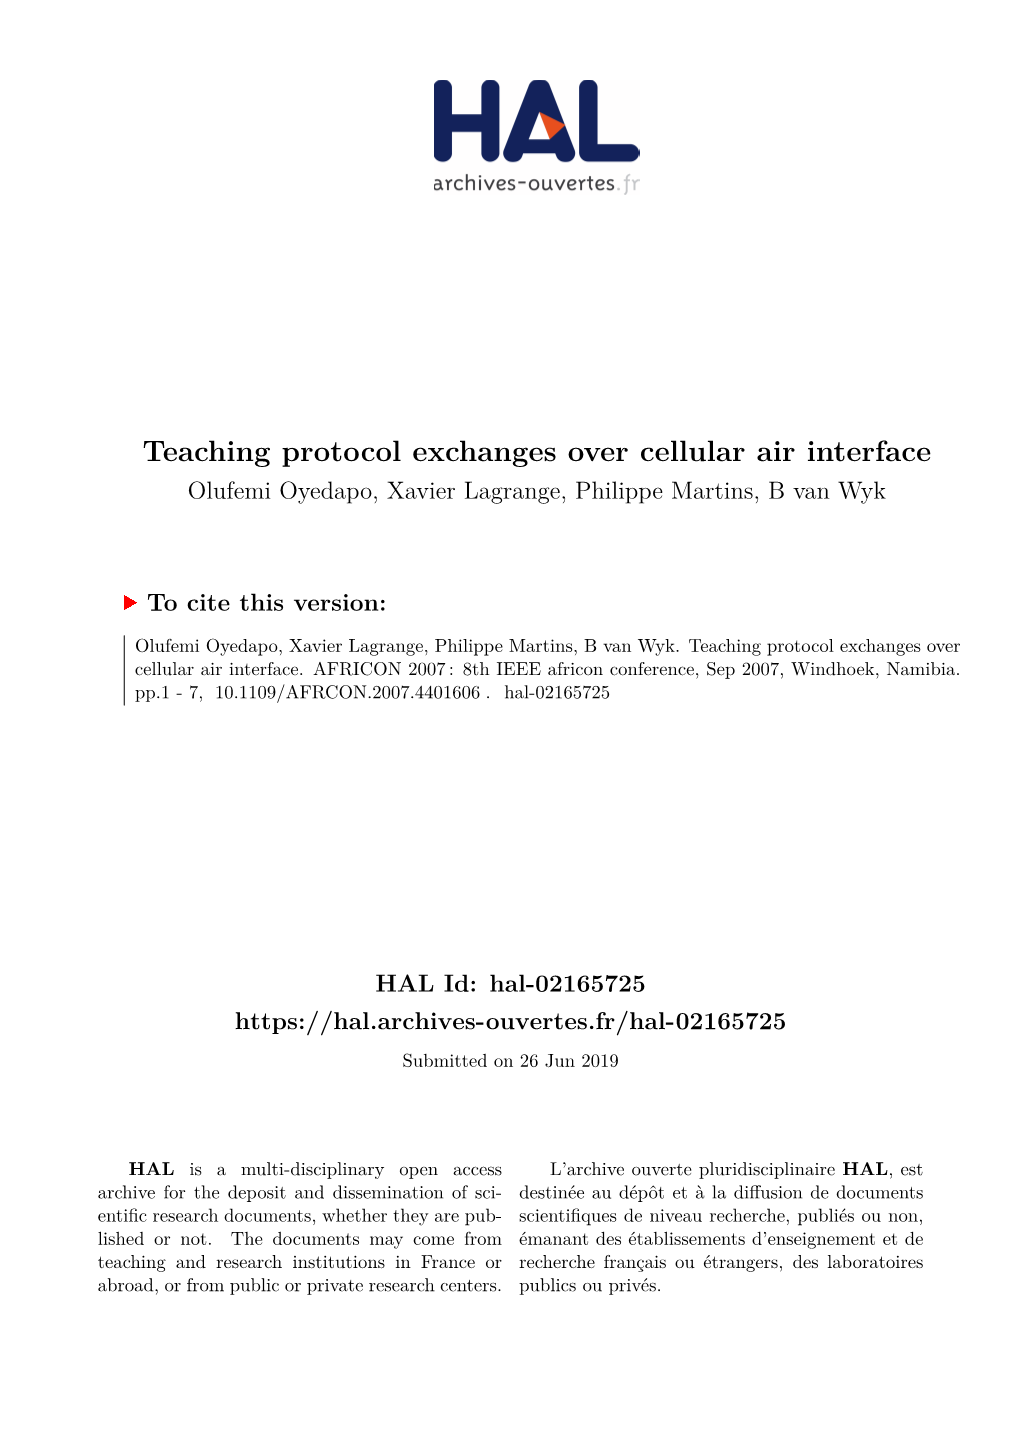 Teaching Protocol Exchanges Over Cellular Air Interface Olufemi Oyedapo, Xavier Lagrange, Philippe Martins, B Van Wyk